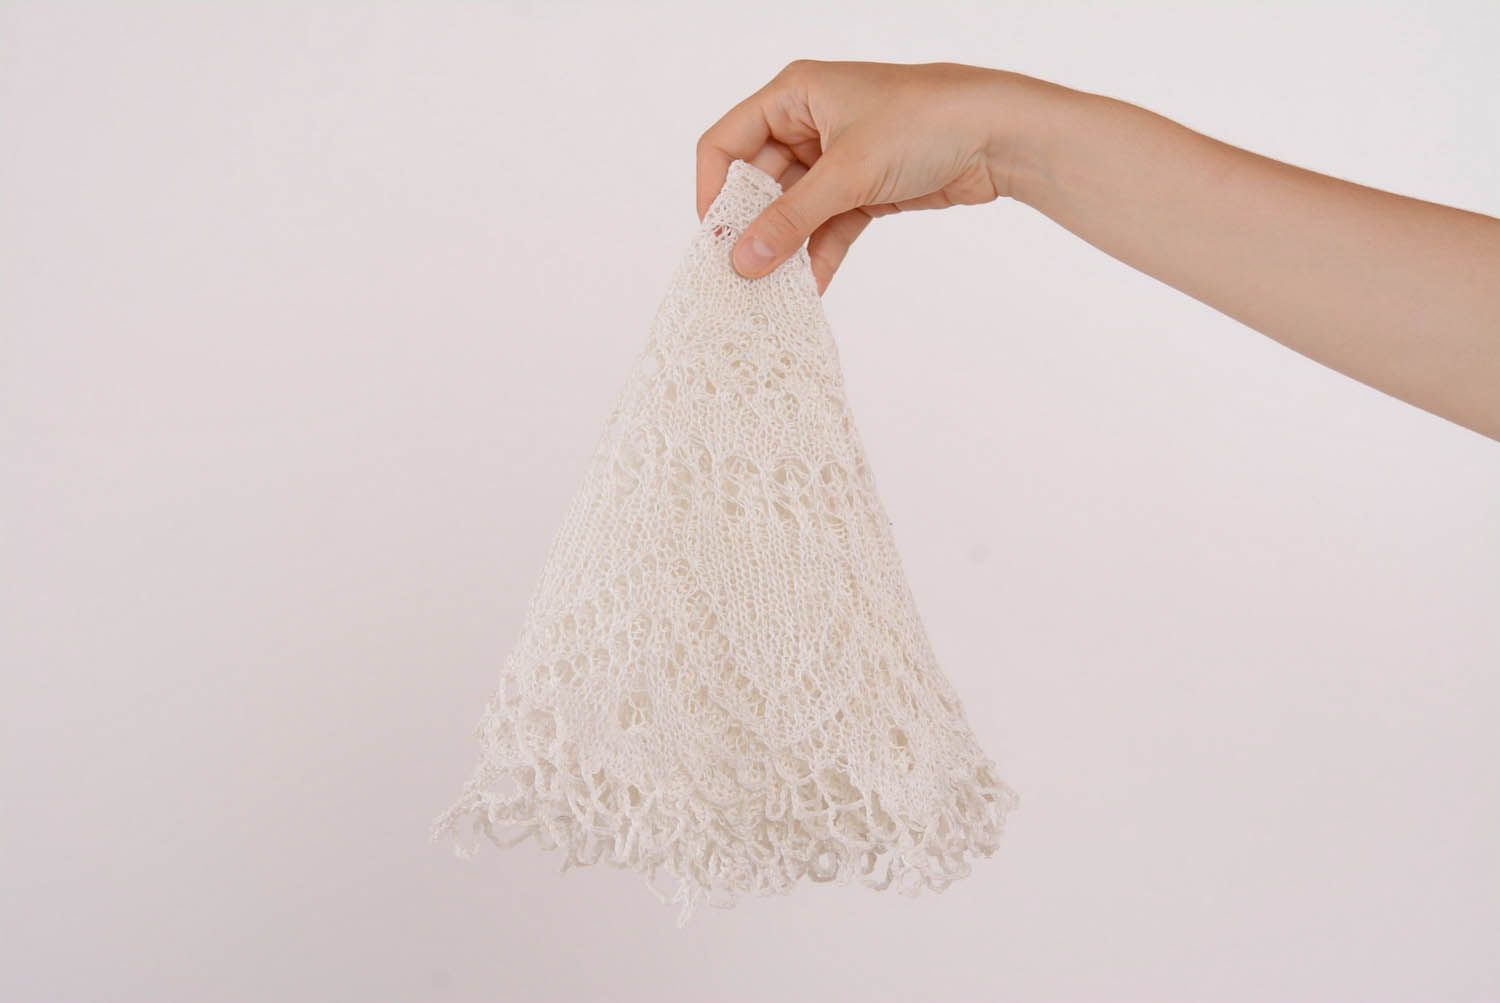 Lace crocheted napkin photo 2